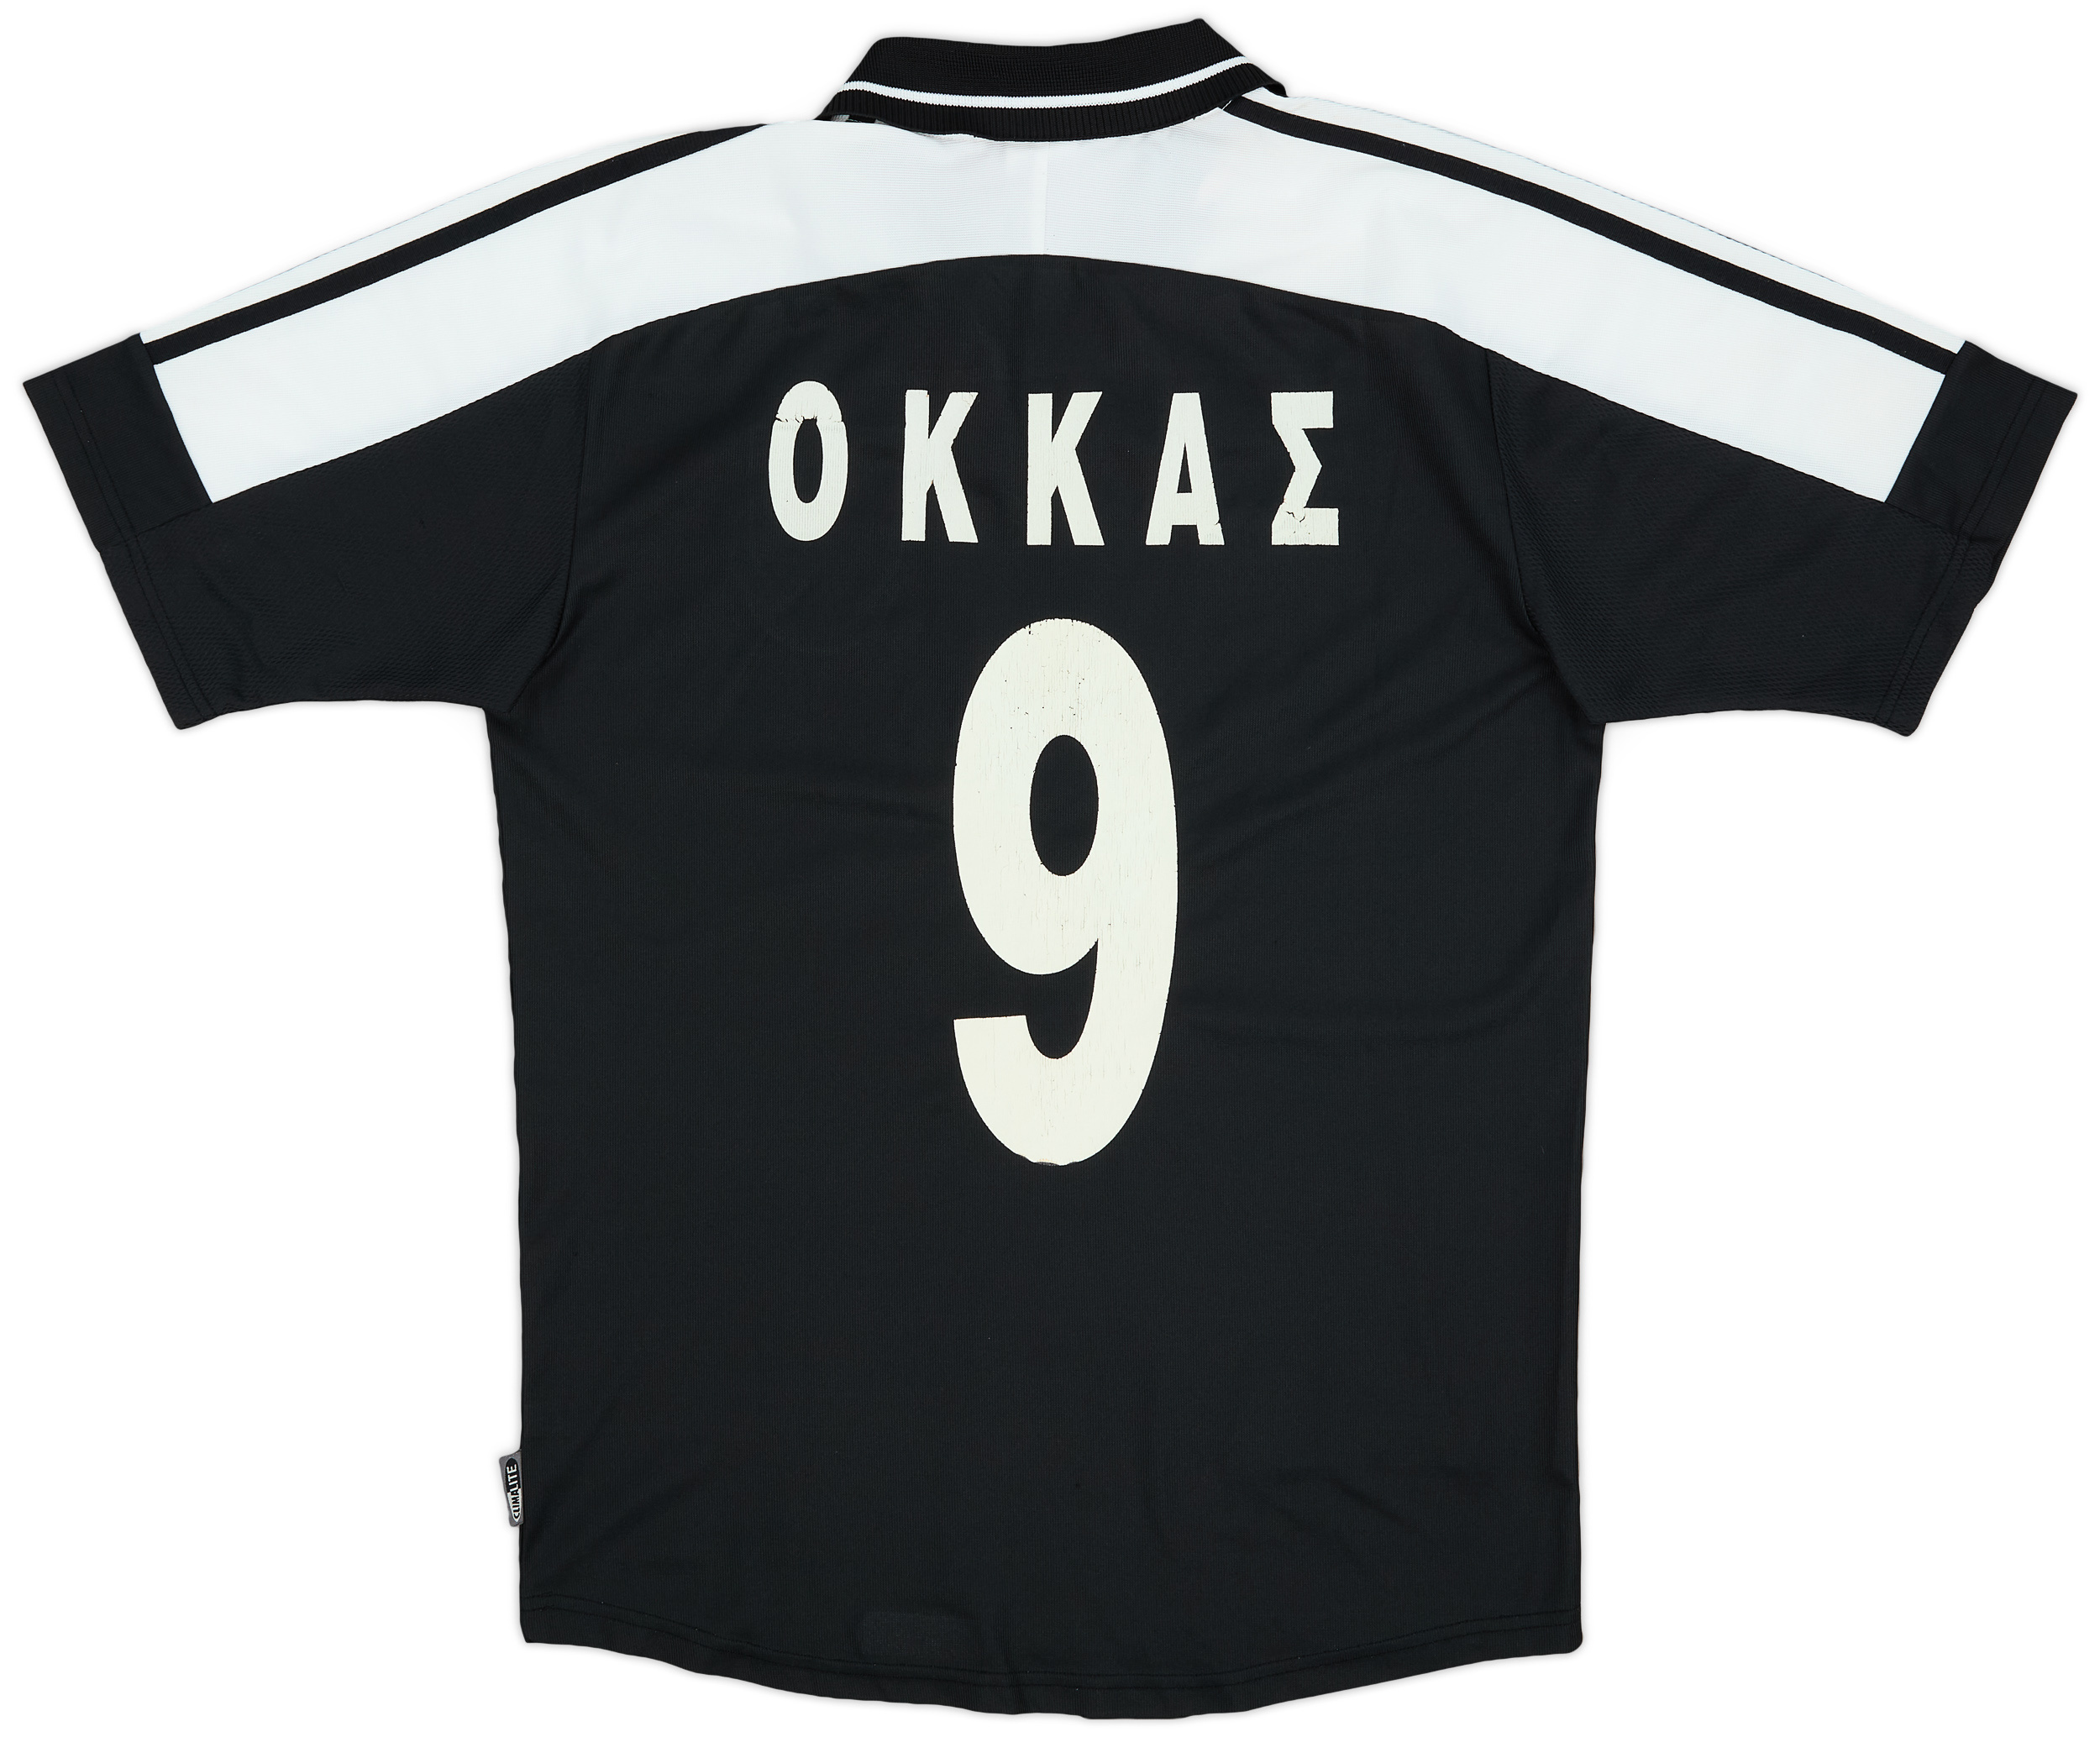 PAOK FC  Fora camisa (Original)